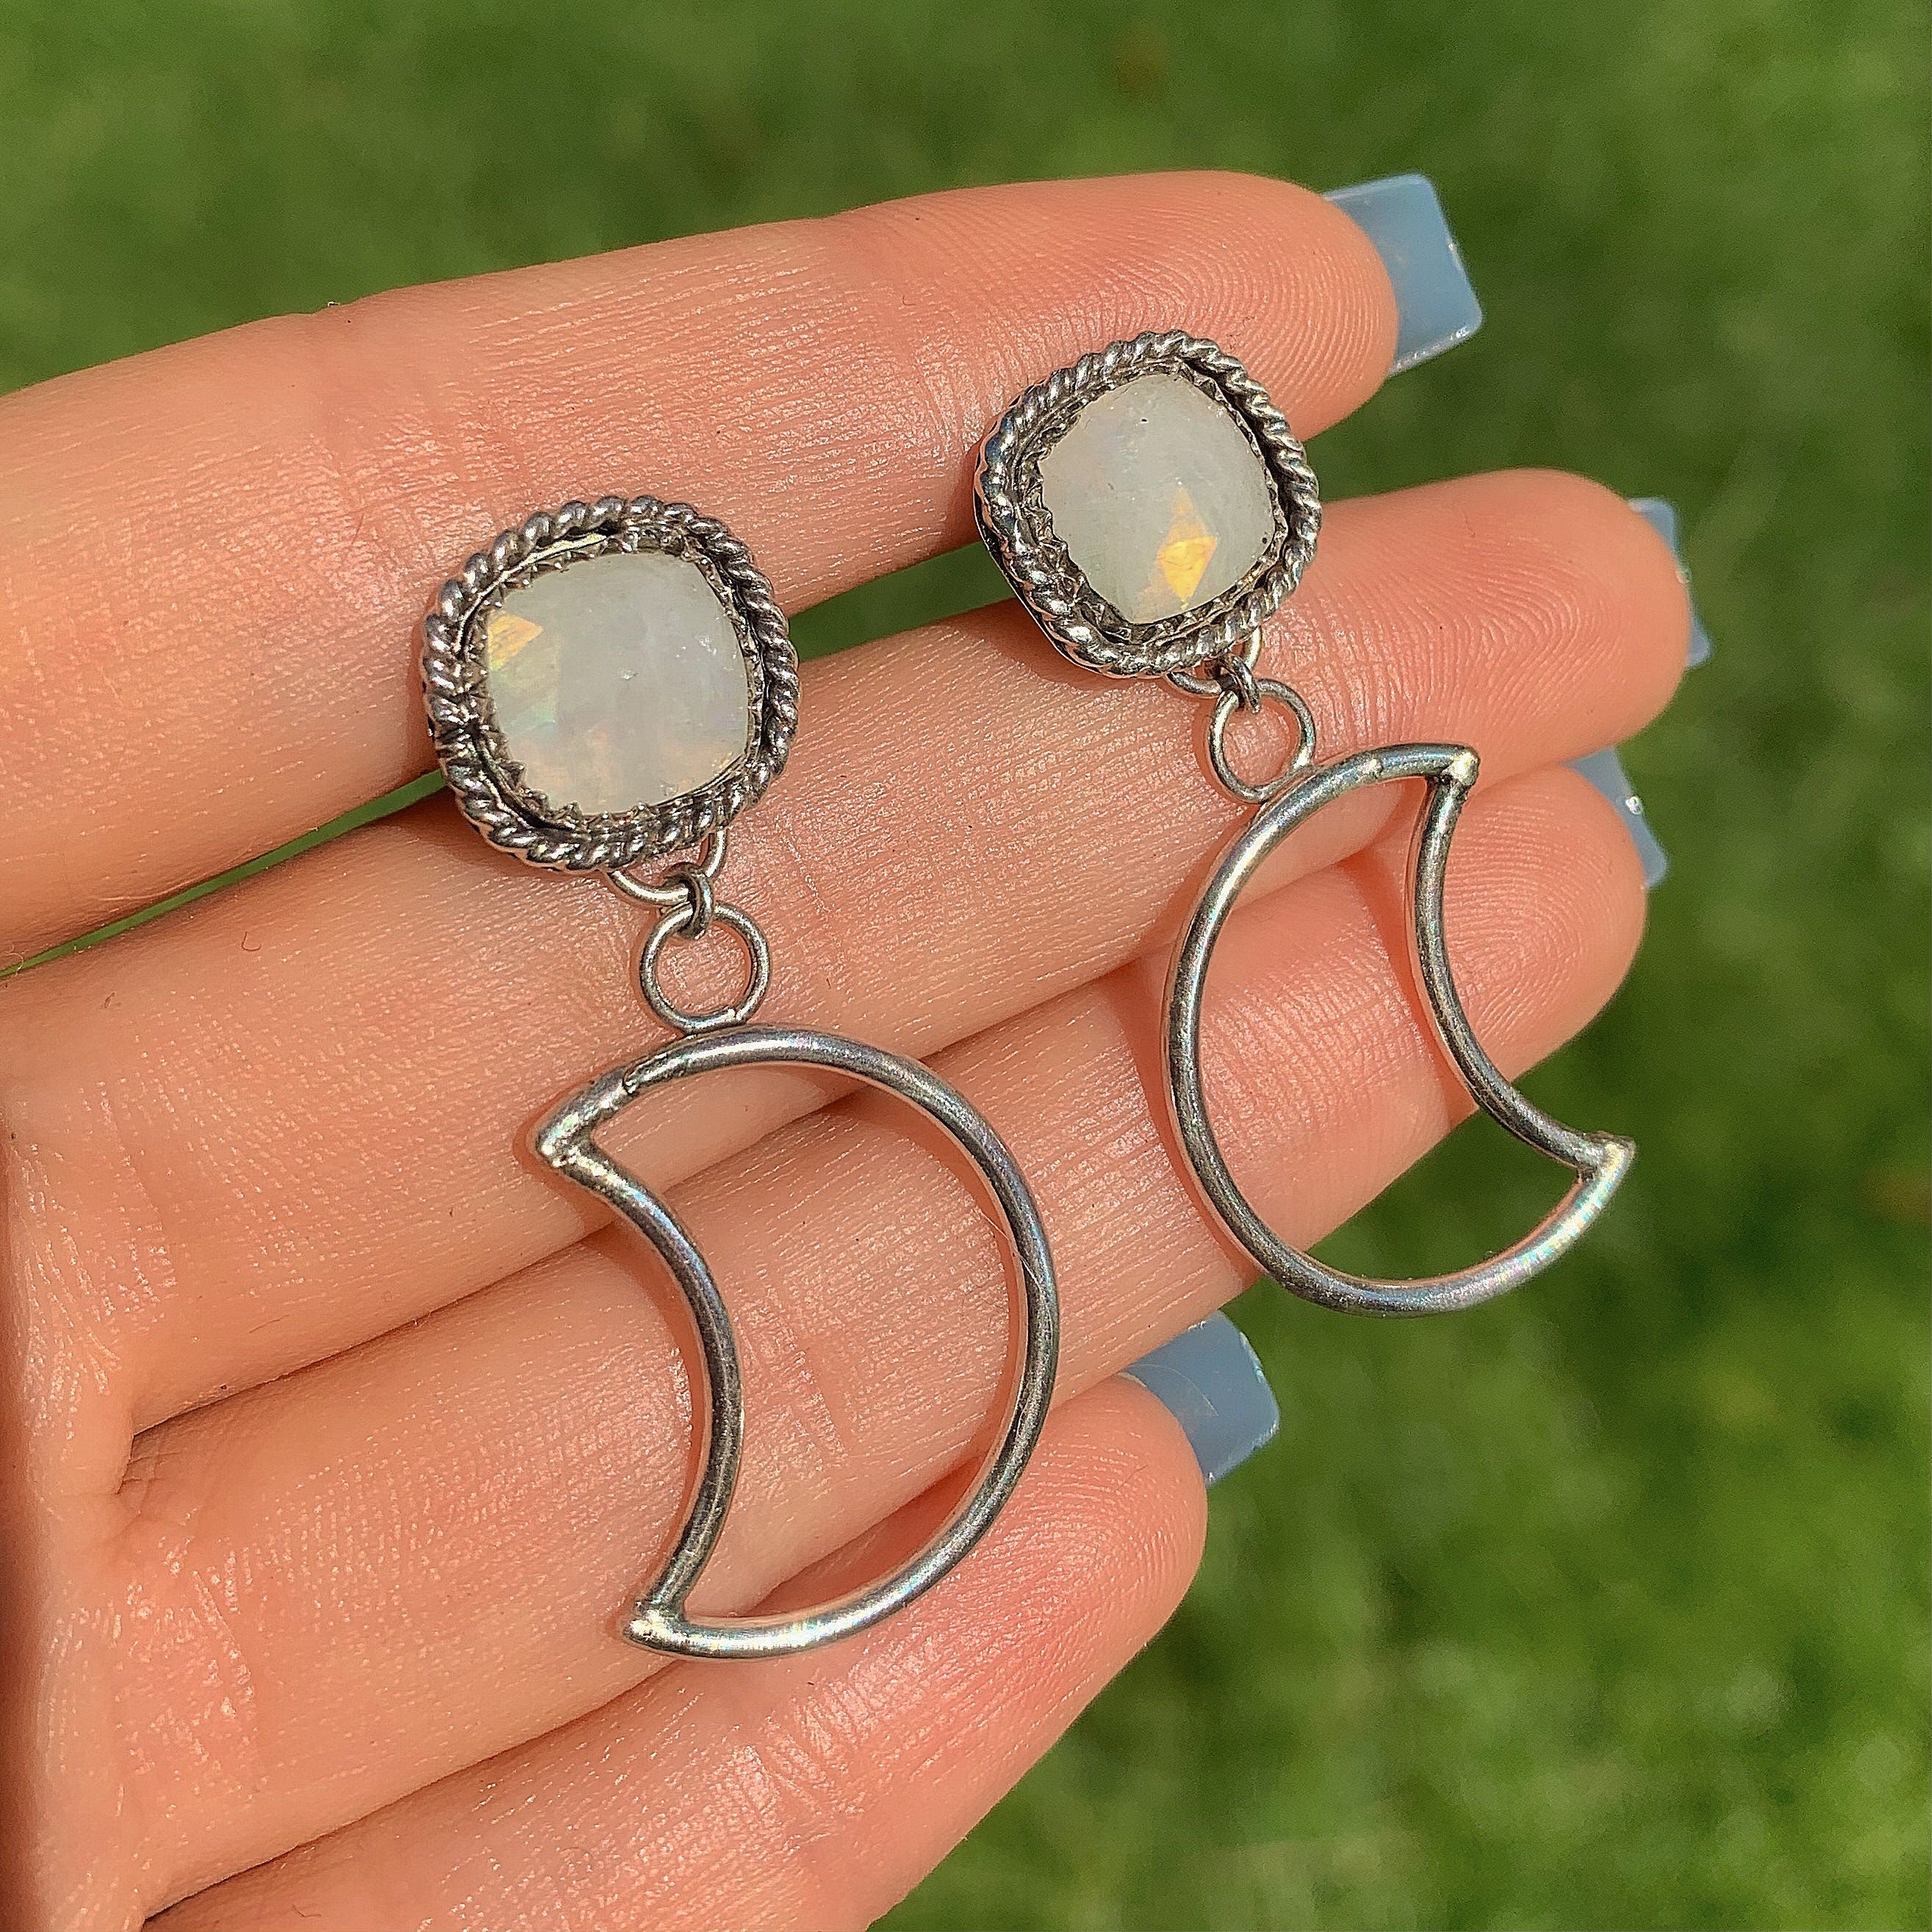 Moonstone Moon Earrings - Sterling Silver 